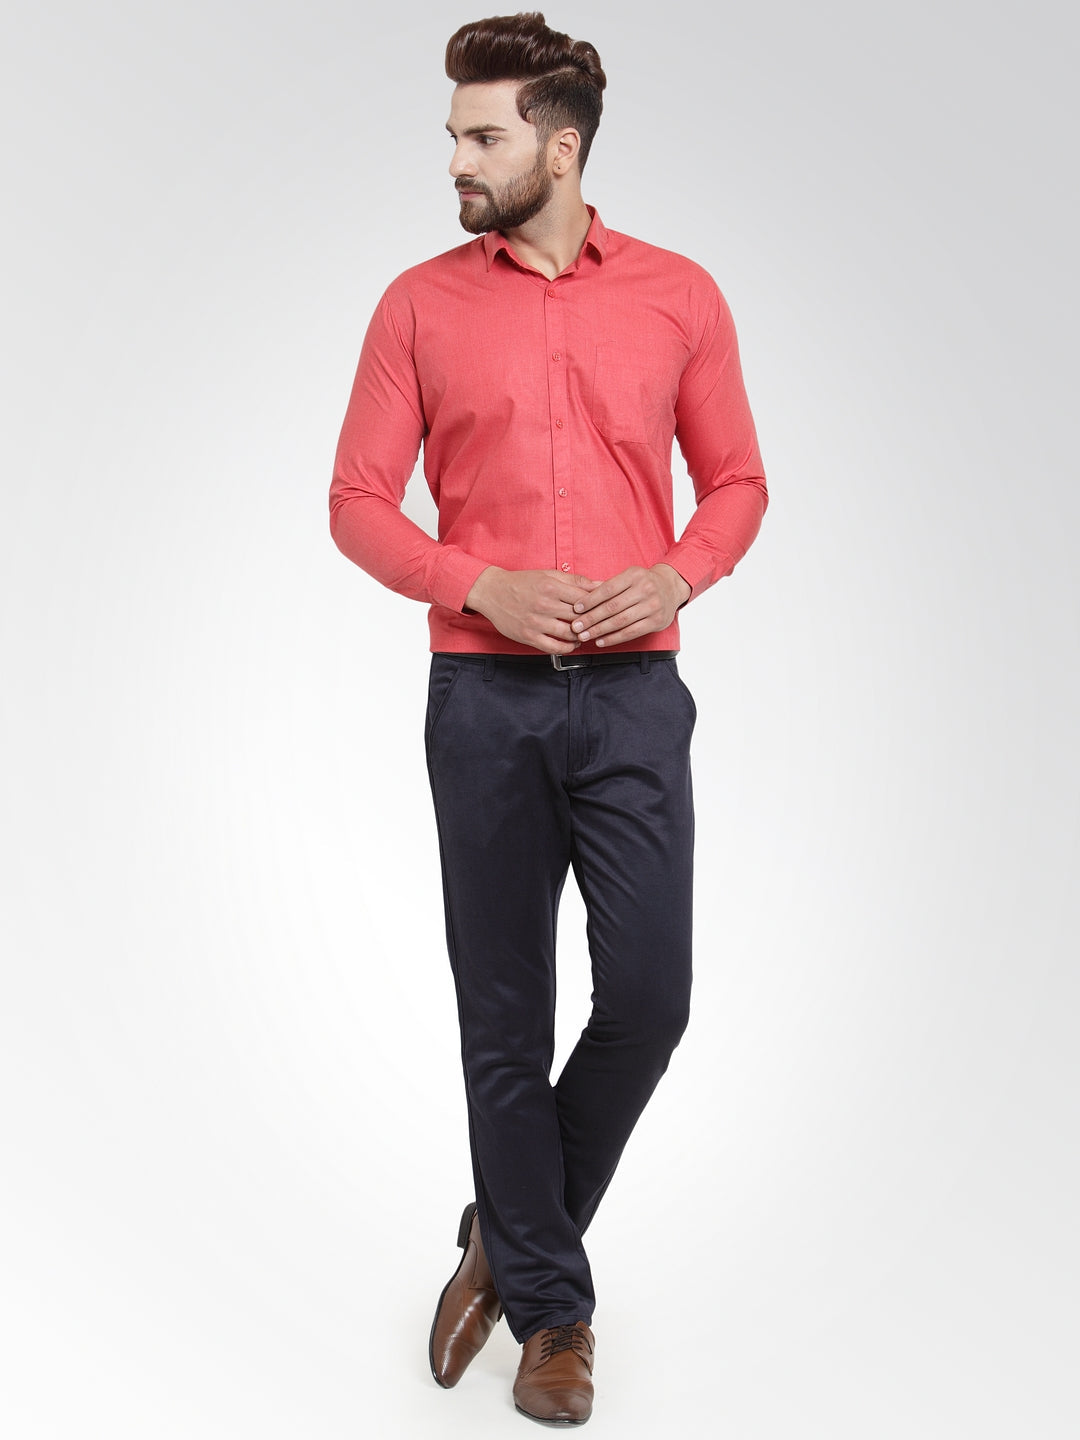 Men's Cotton Solid Desire Orange Formal Shirt's ( SF 361Desire ) - Jainish